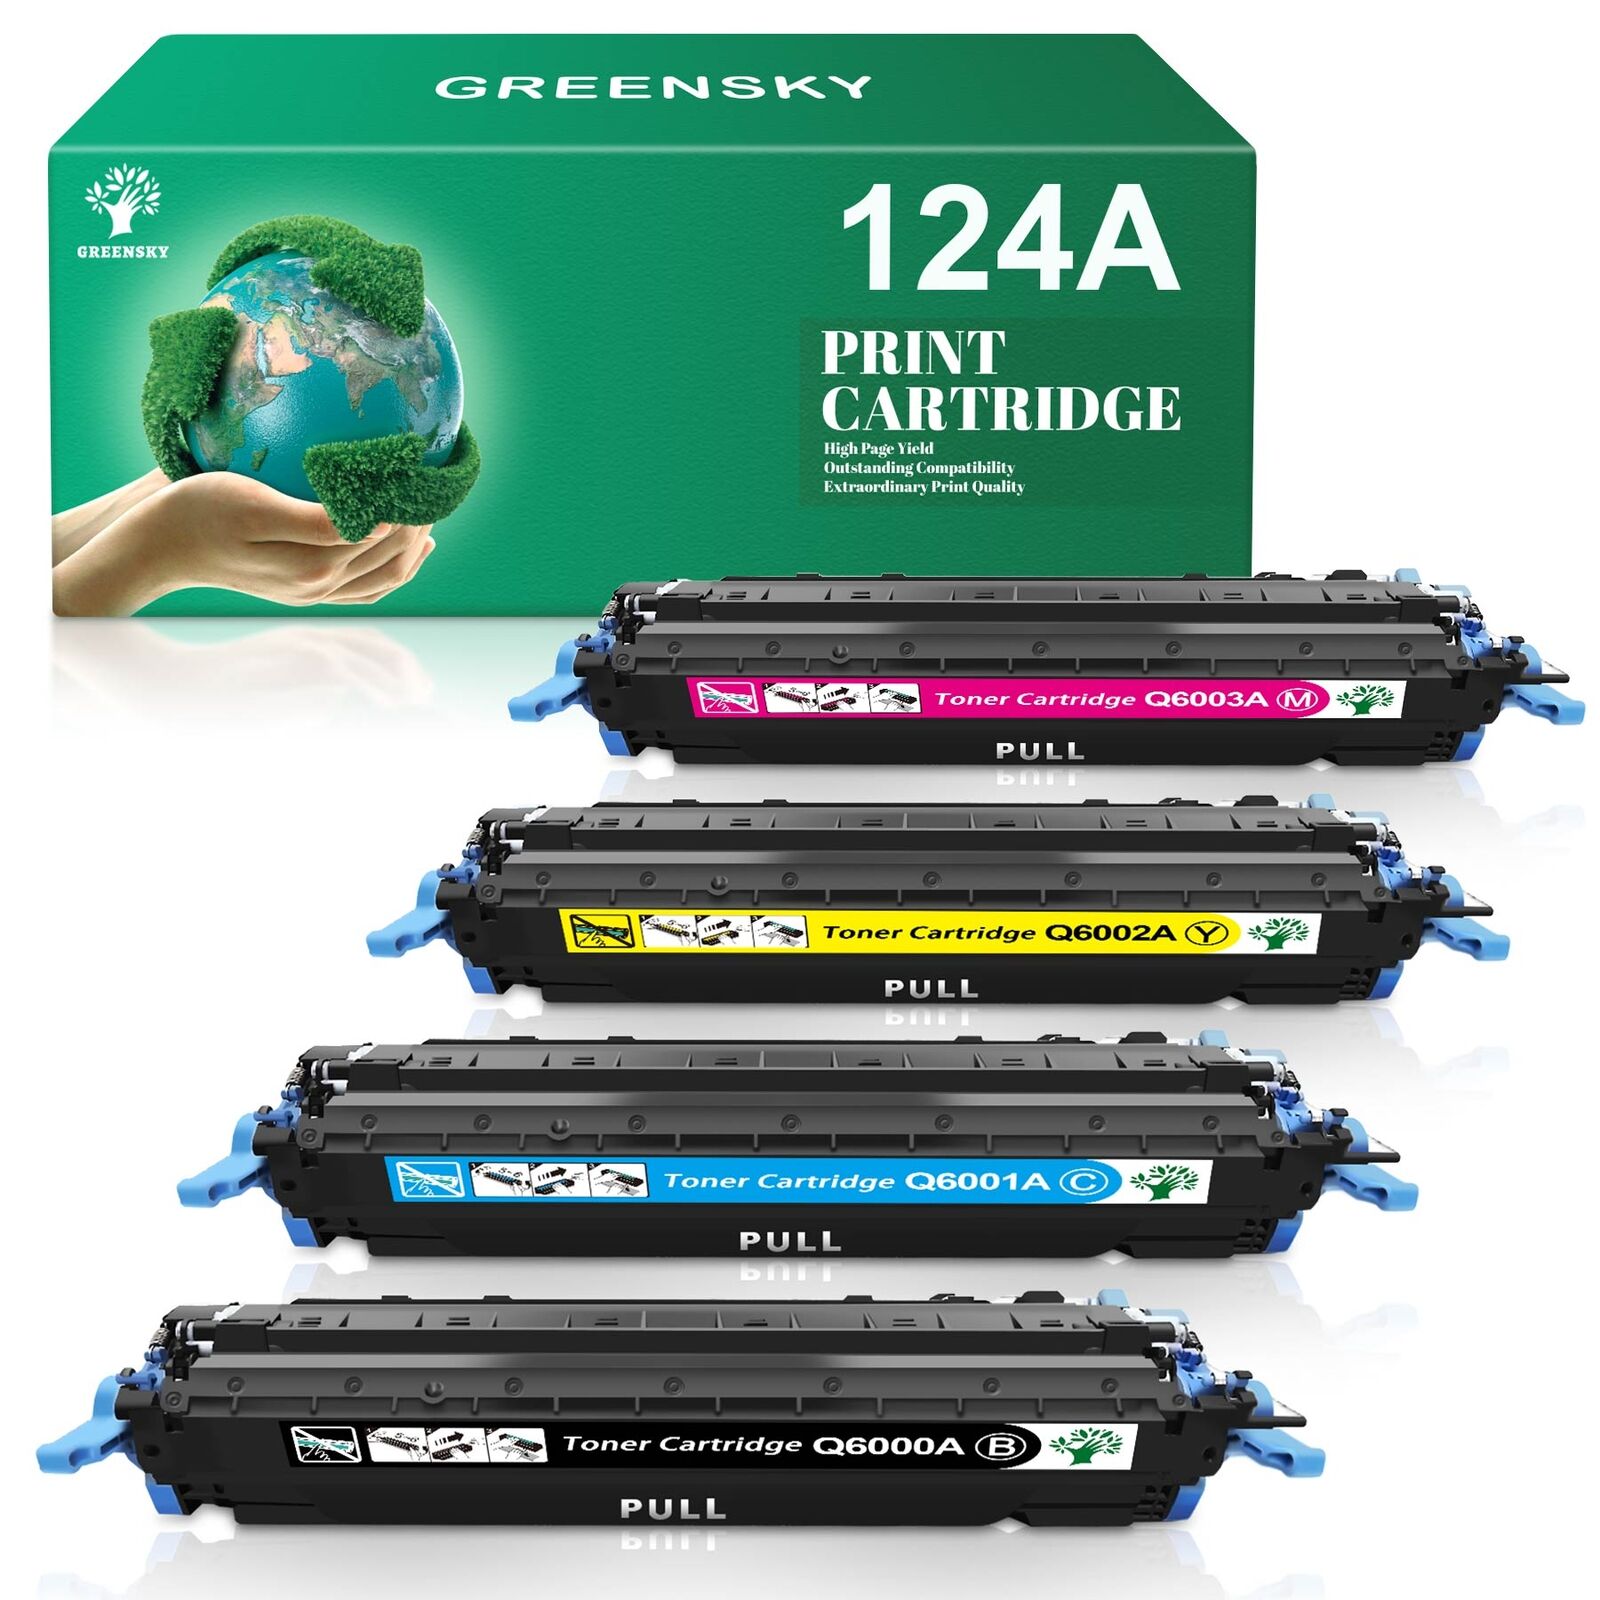 4PK Q6000A Toner Cartridge for 124A HP Color LaserJet 1600 2600n CM1017 Printer